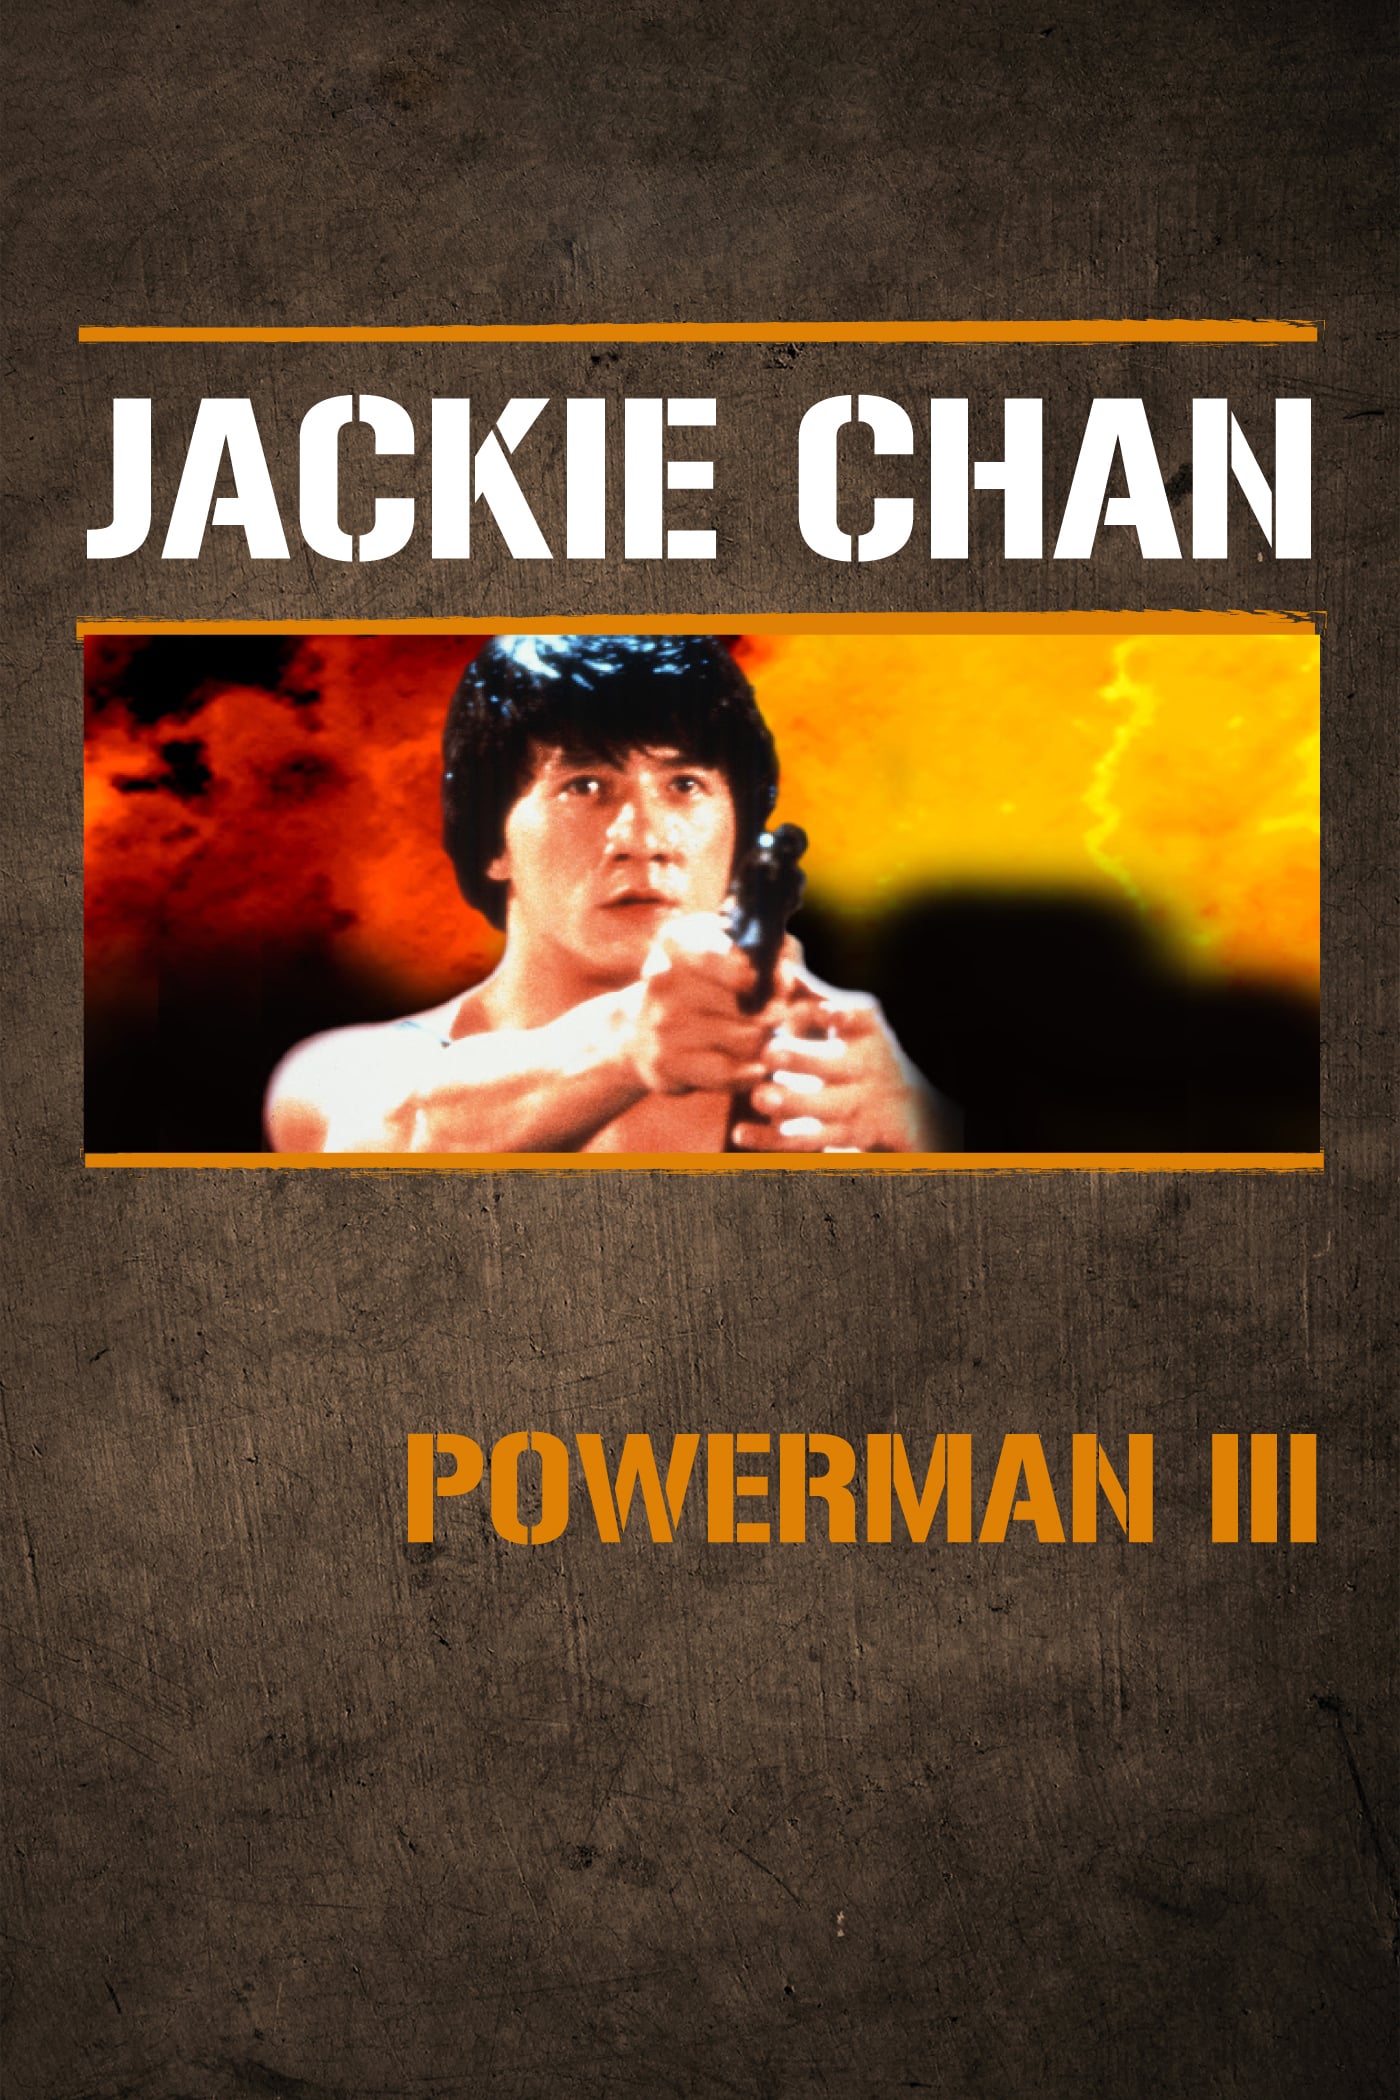 Plakat von "Powerman 3"